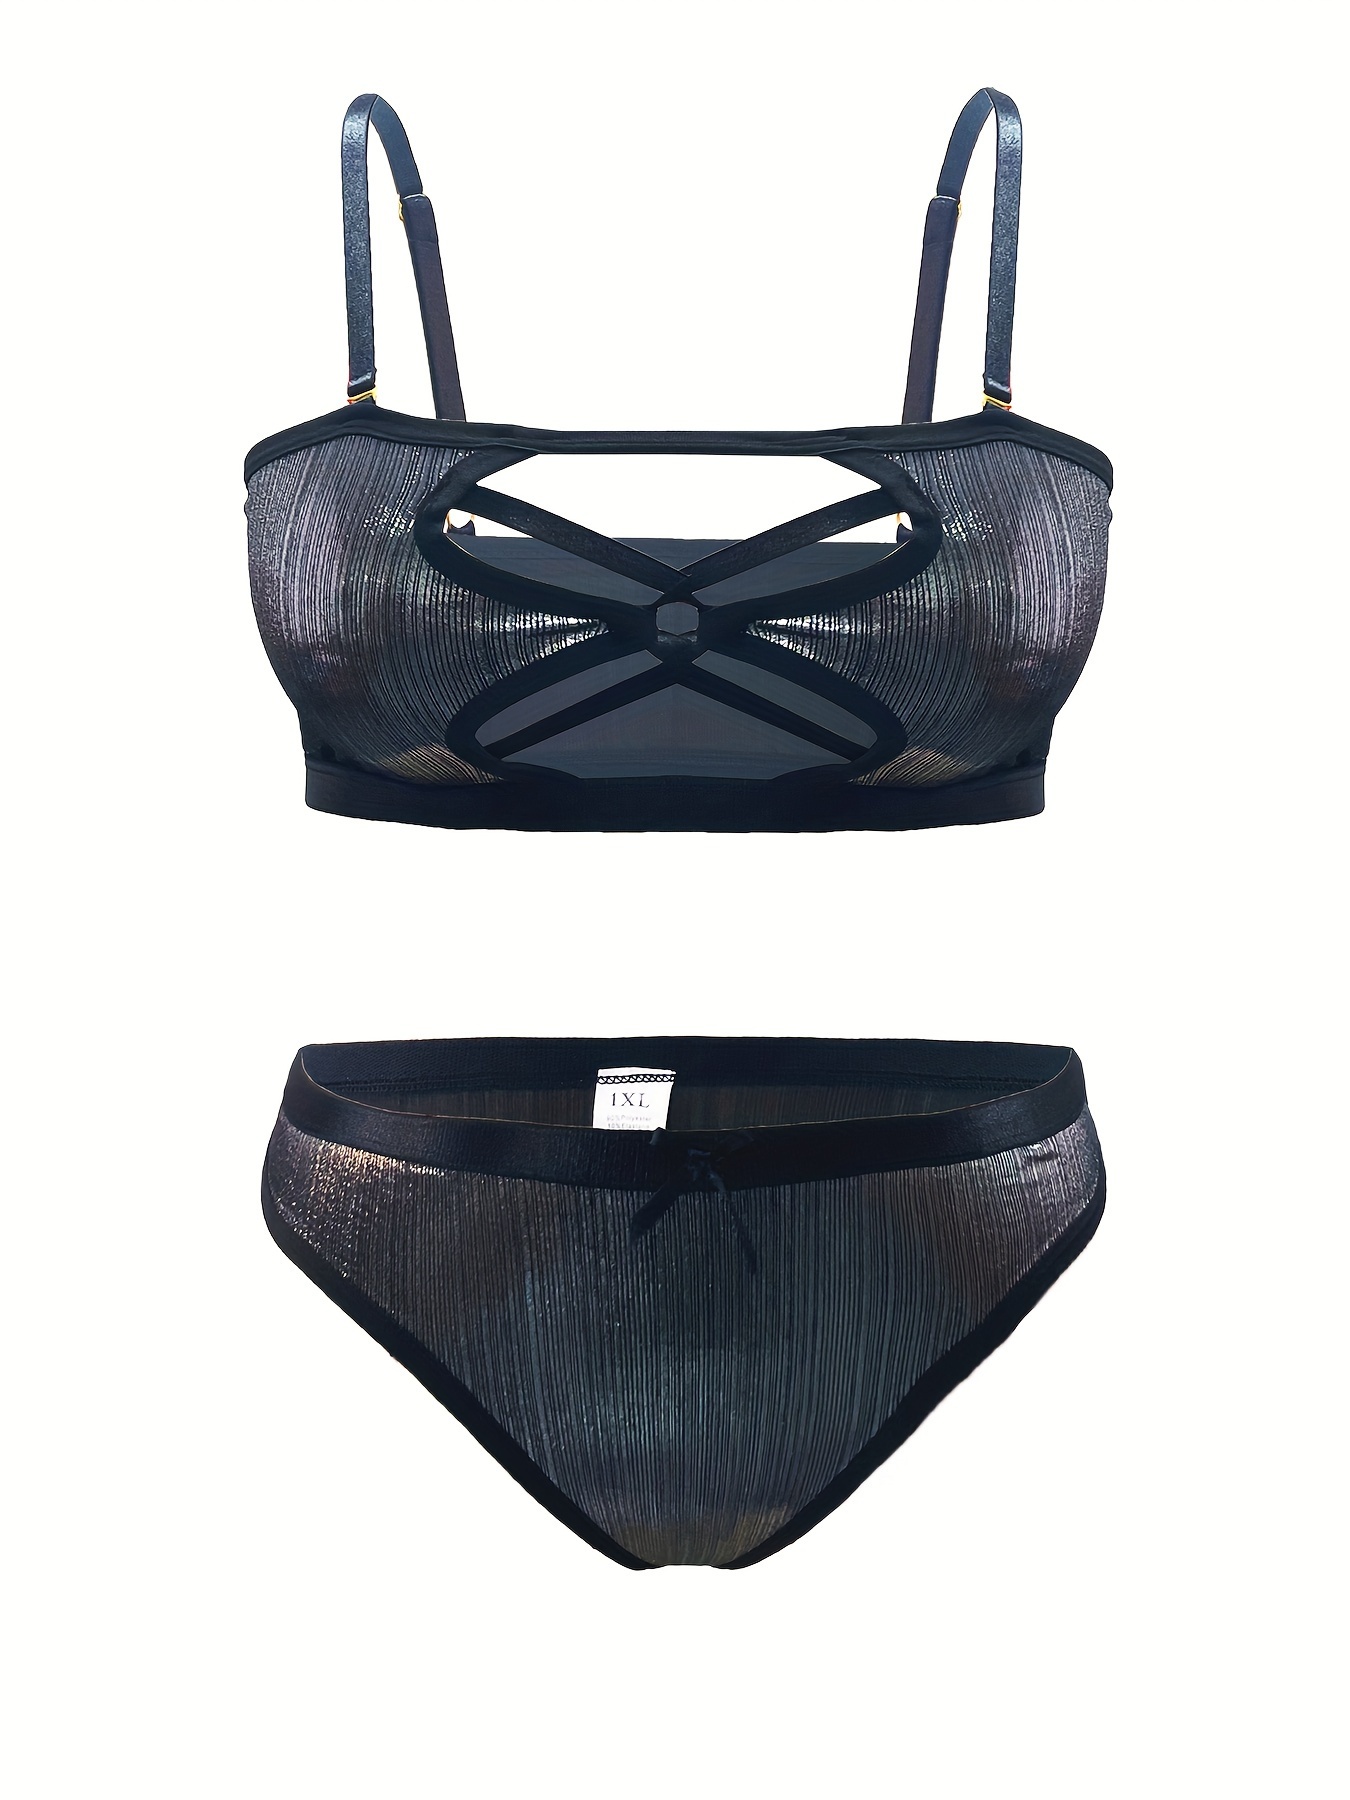 Women's Shiny Metallic Lingerie Bra Thong Underwear Set Underwire Sexy  Sleepwear